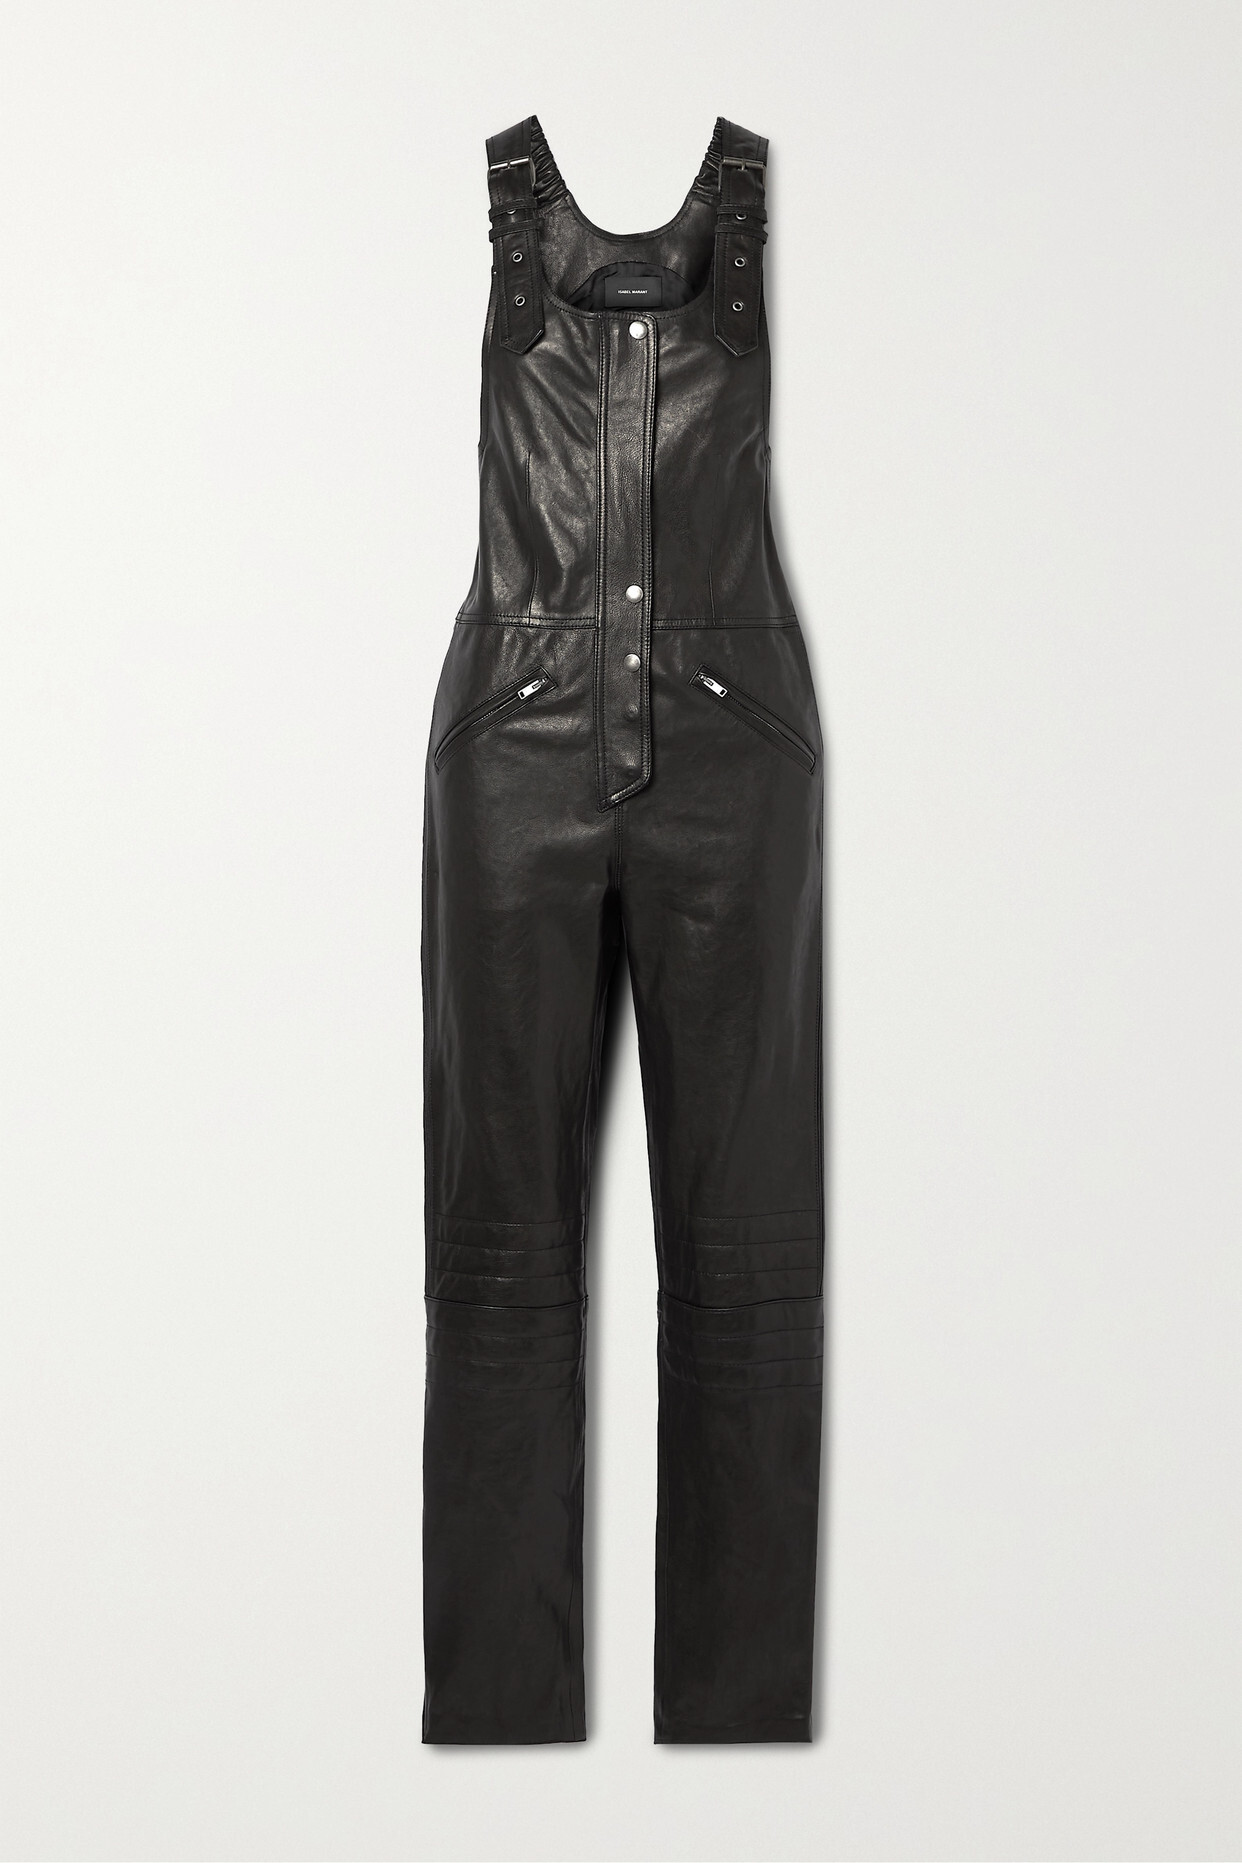 Isabel Marant - Apolina Leather Jumpsuit - Black